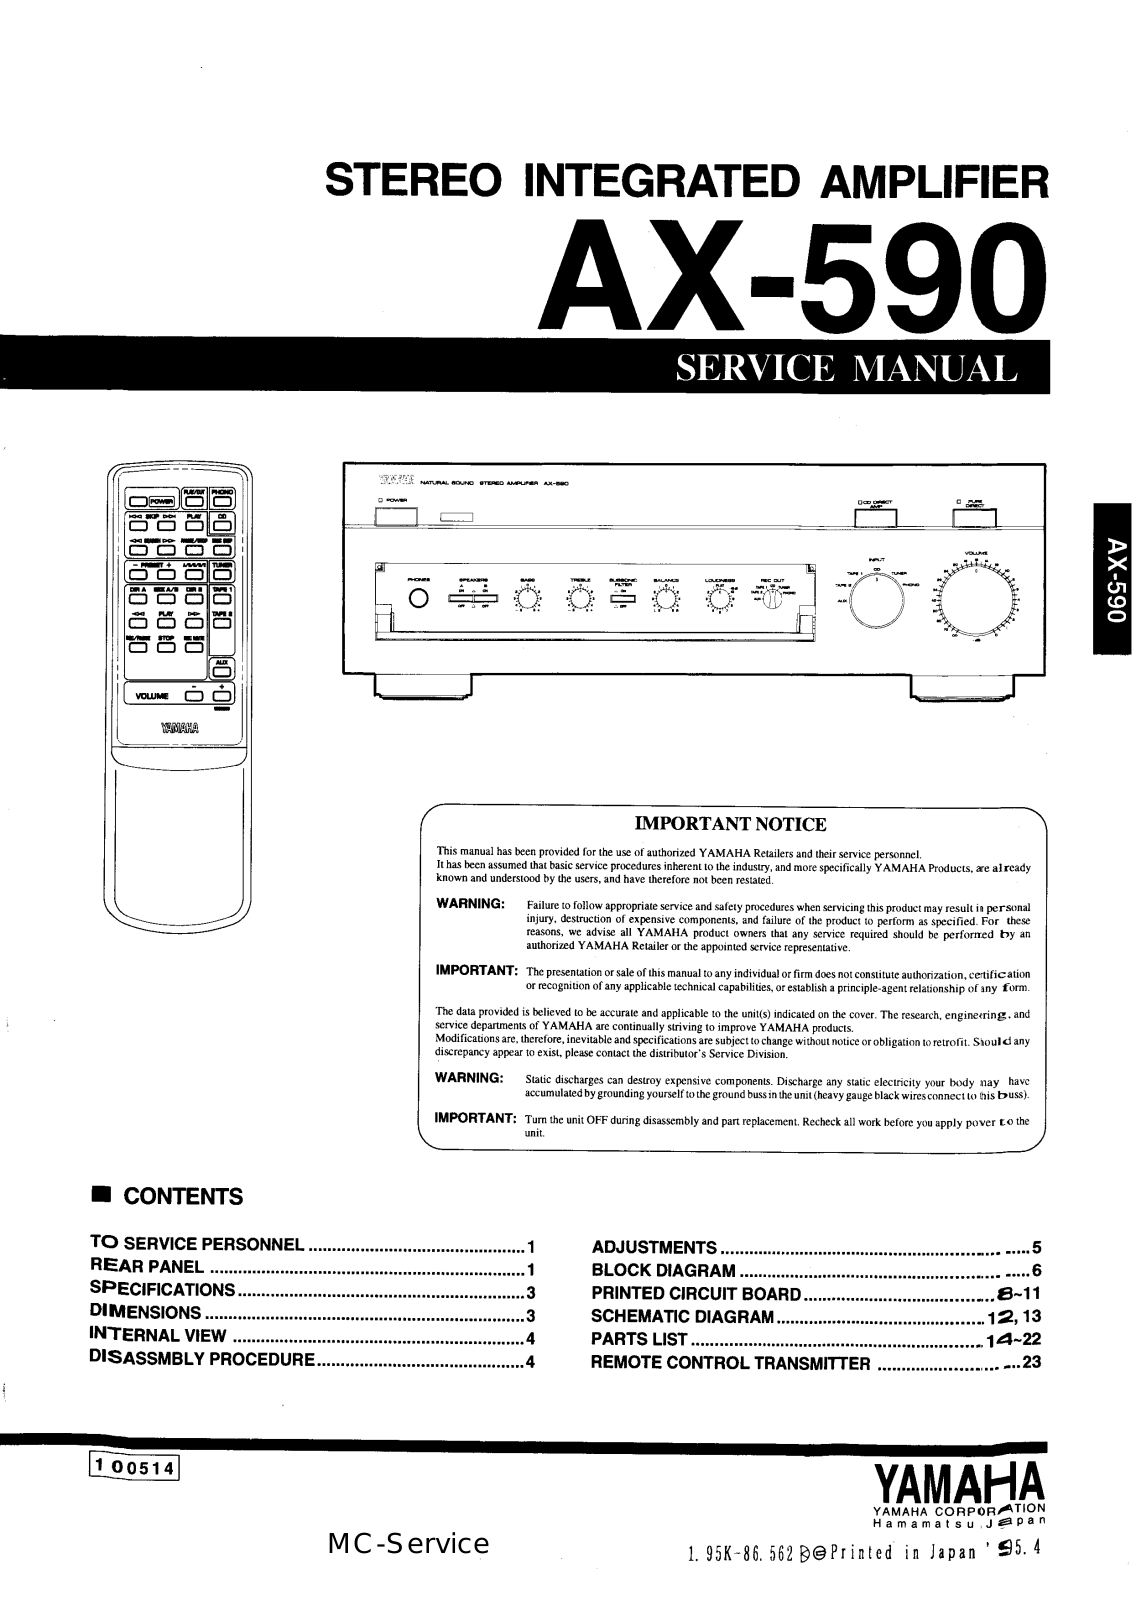 Yamaha AX-590 Service Manual